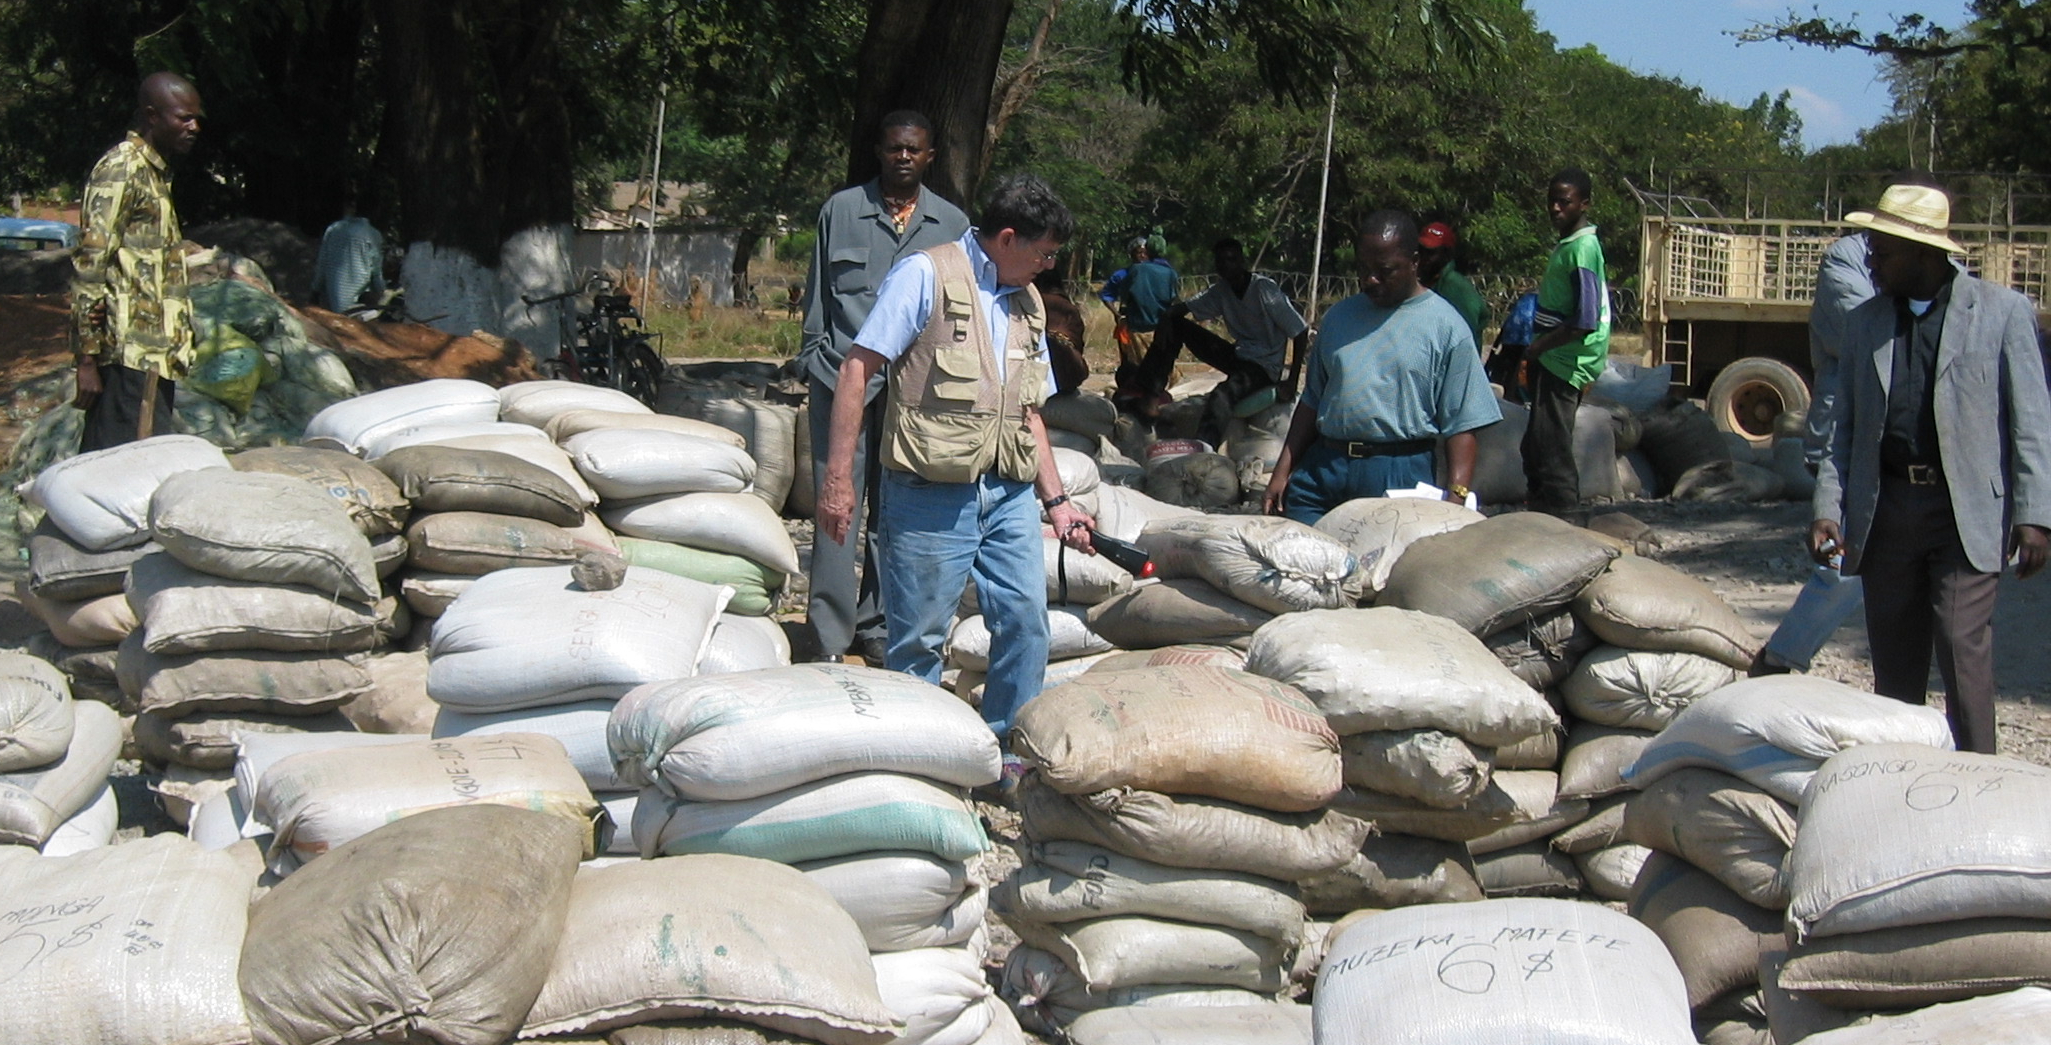 Robert Kelley measuring sacks of ore to identify any containing uranium as a major impurity, Kolwezi, the Democratic Republic of Congo, 2005. Photo provided by Robert Kelley.